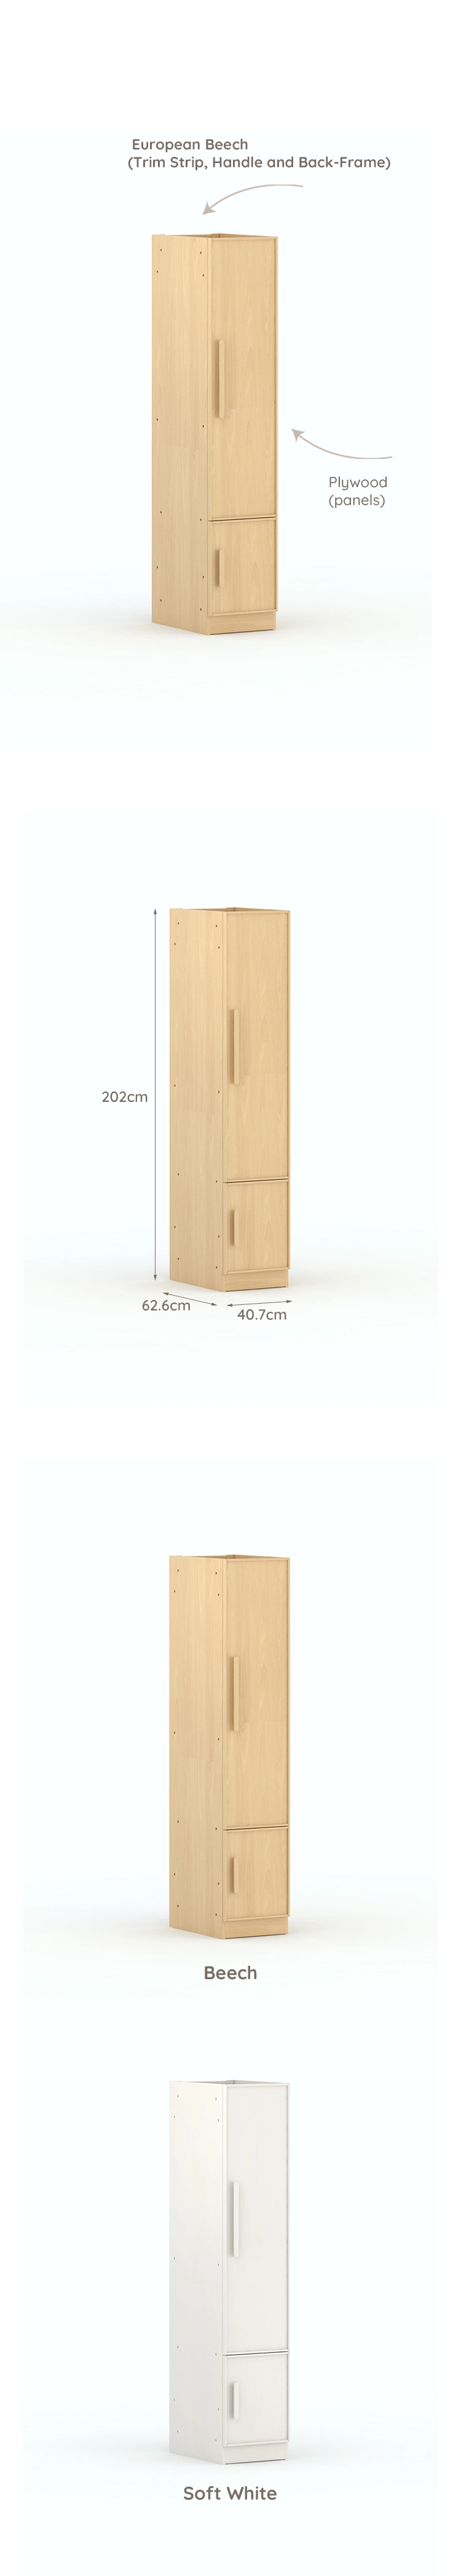 Boori Small Size Single Door Wooden Storage Wardrobe Cabinet Clothes Organizer